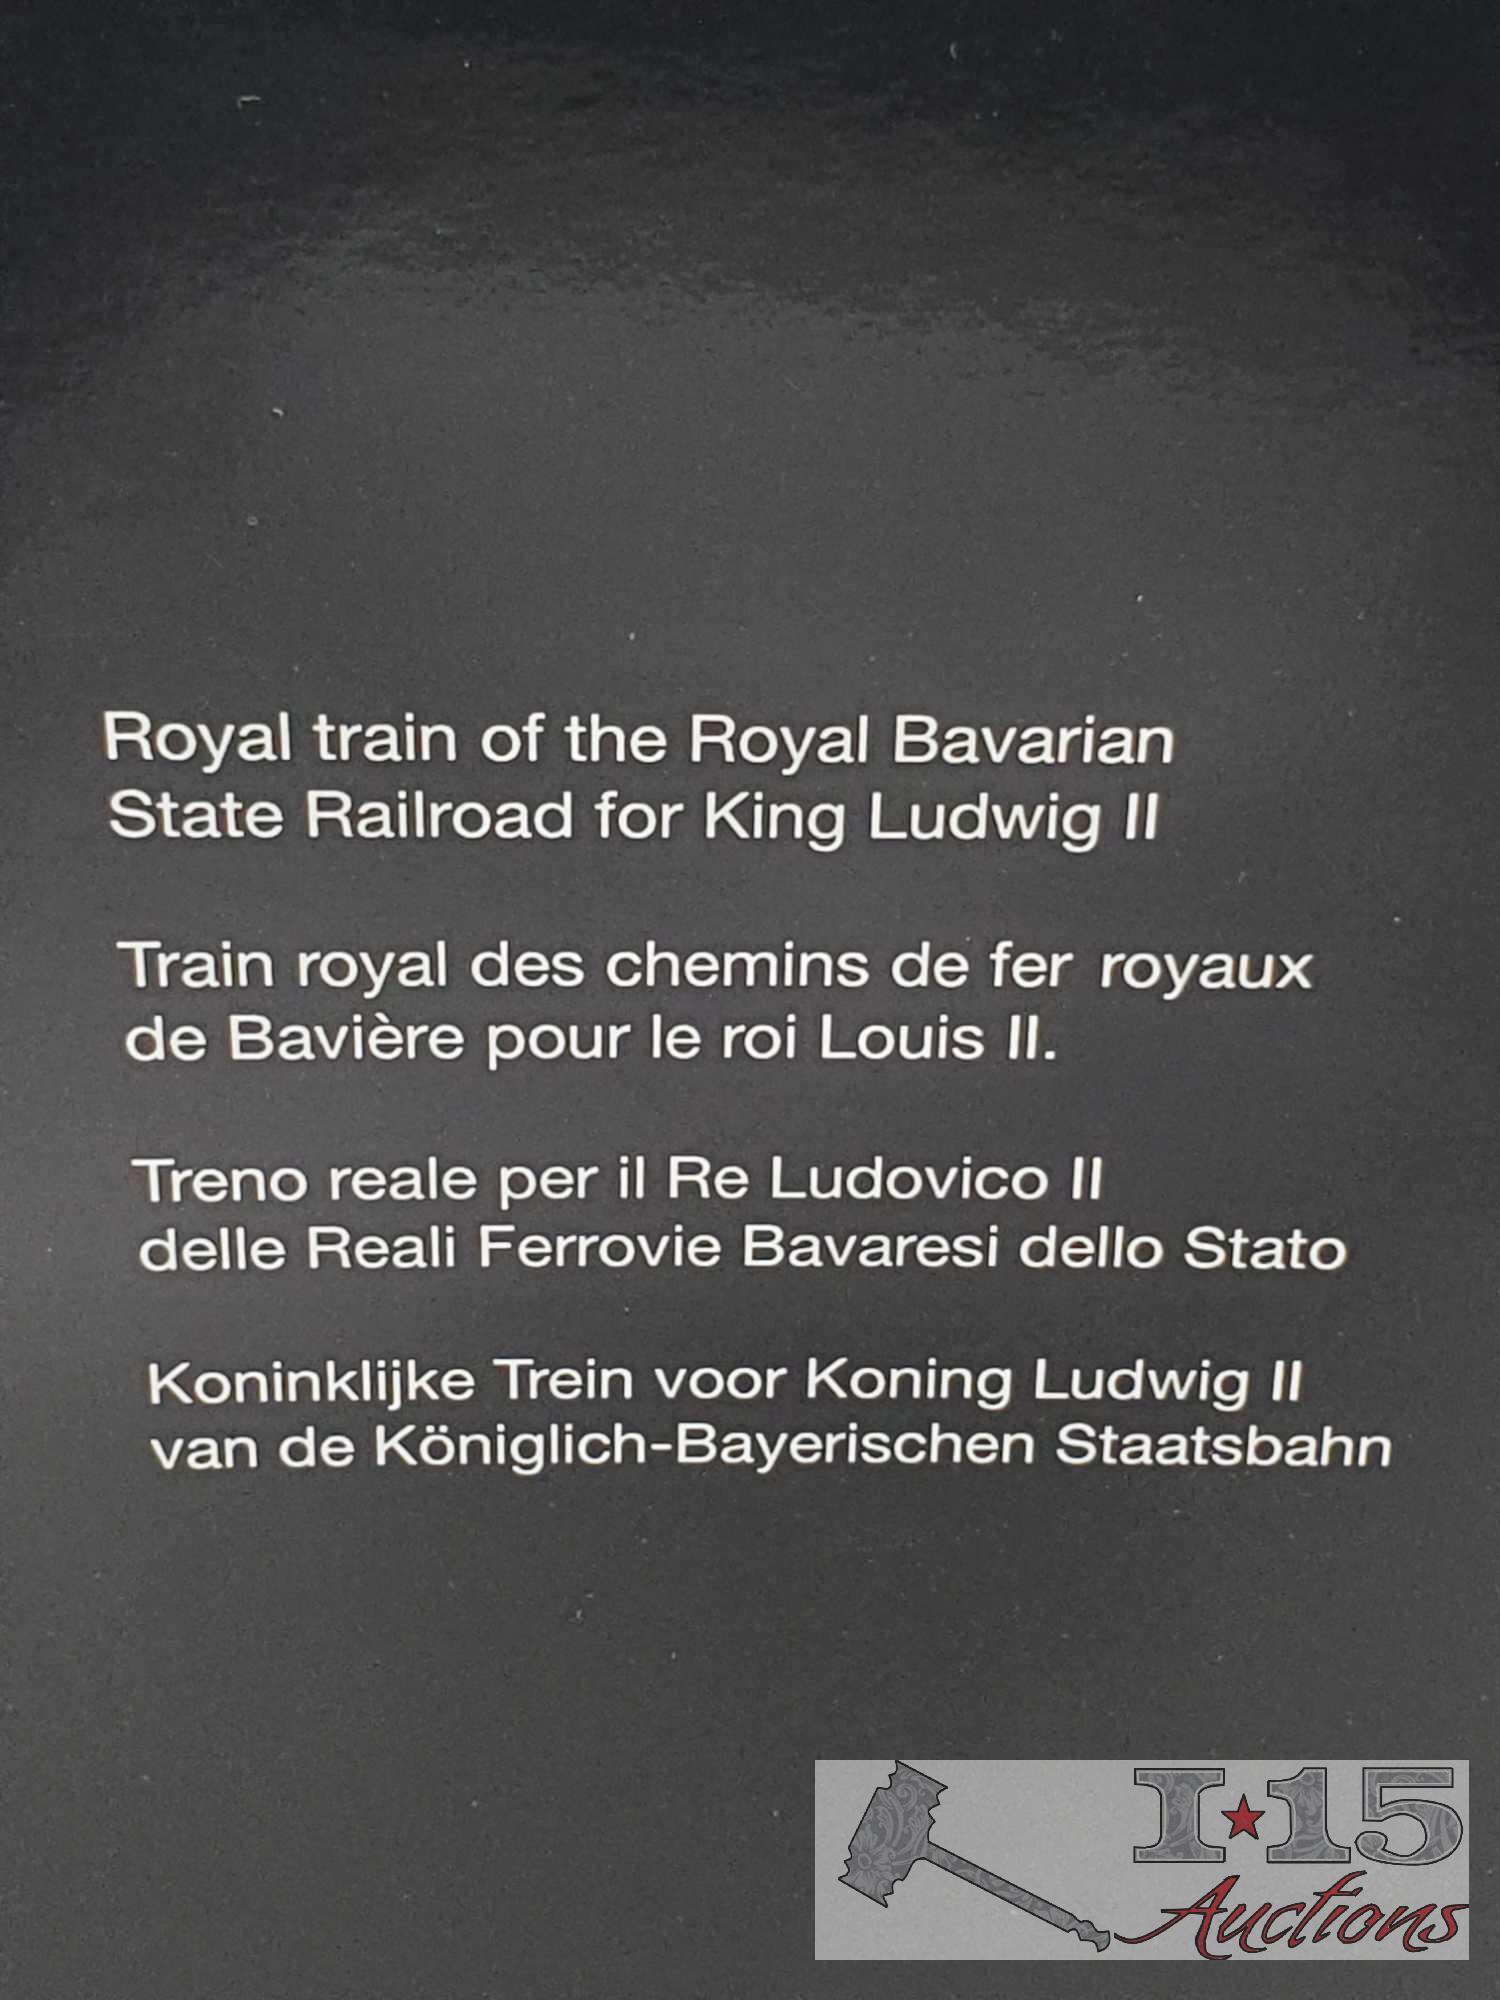 Marklin Mini-Club Z Scale King Ludwig Royal Train Set - 8770